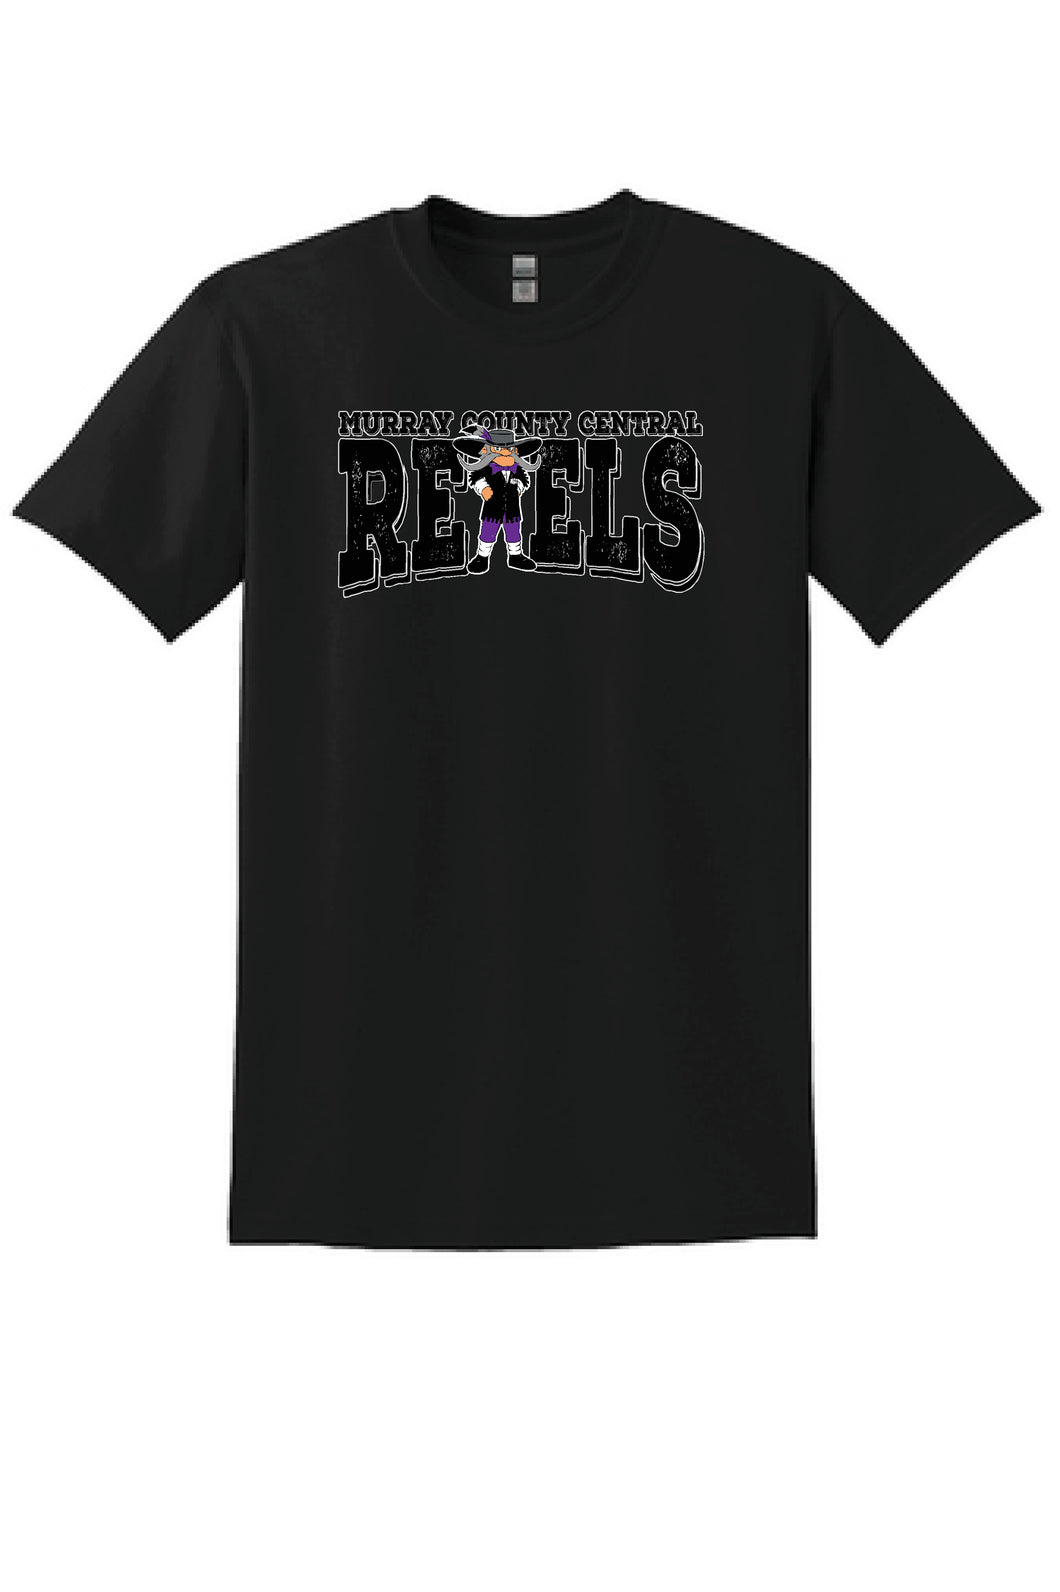 MCC Rebels Rudy Gildan Tshirt - Black